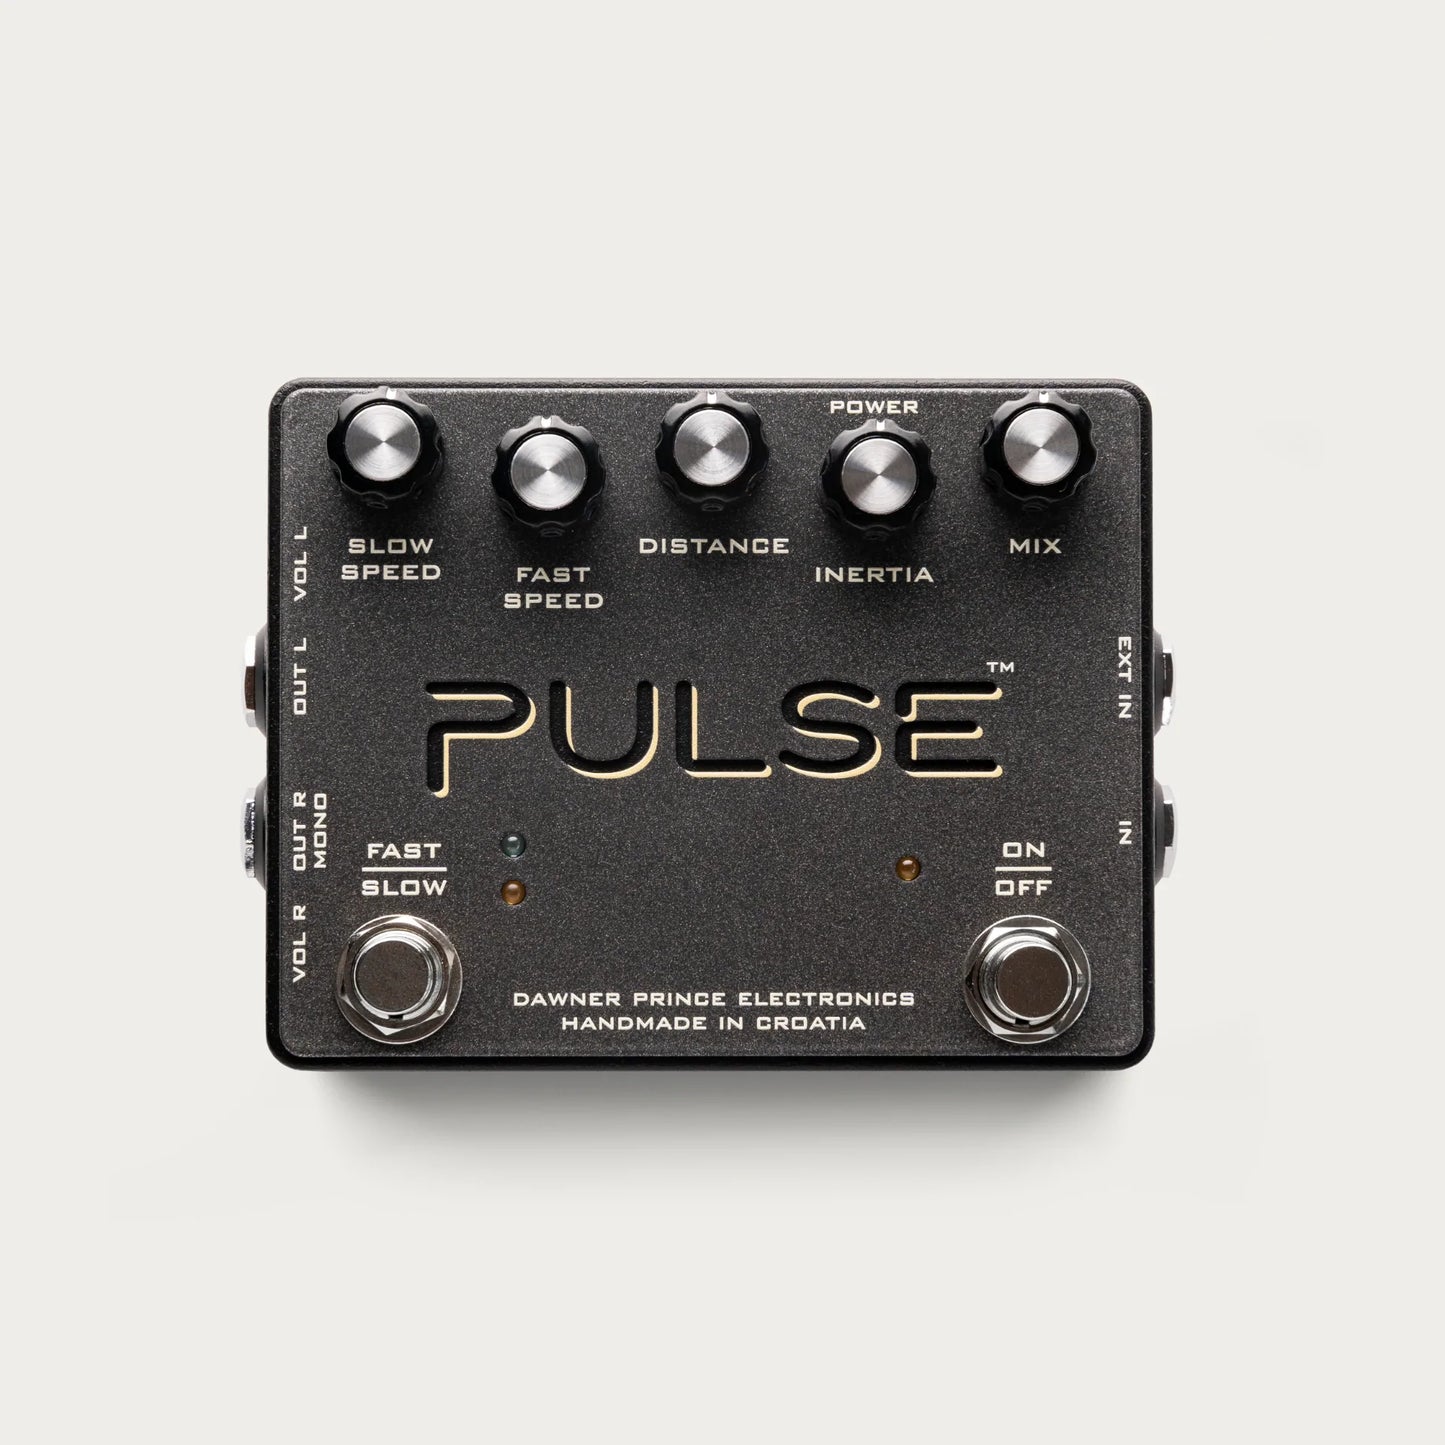 Dawner Prince Electronics PULSE Revolving Speaker Emulator